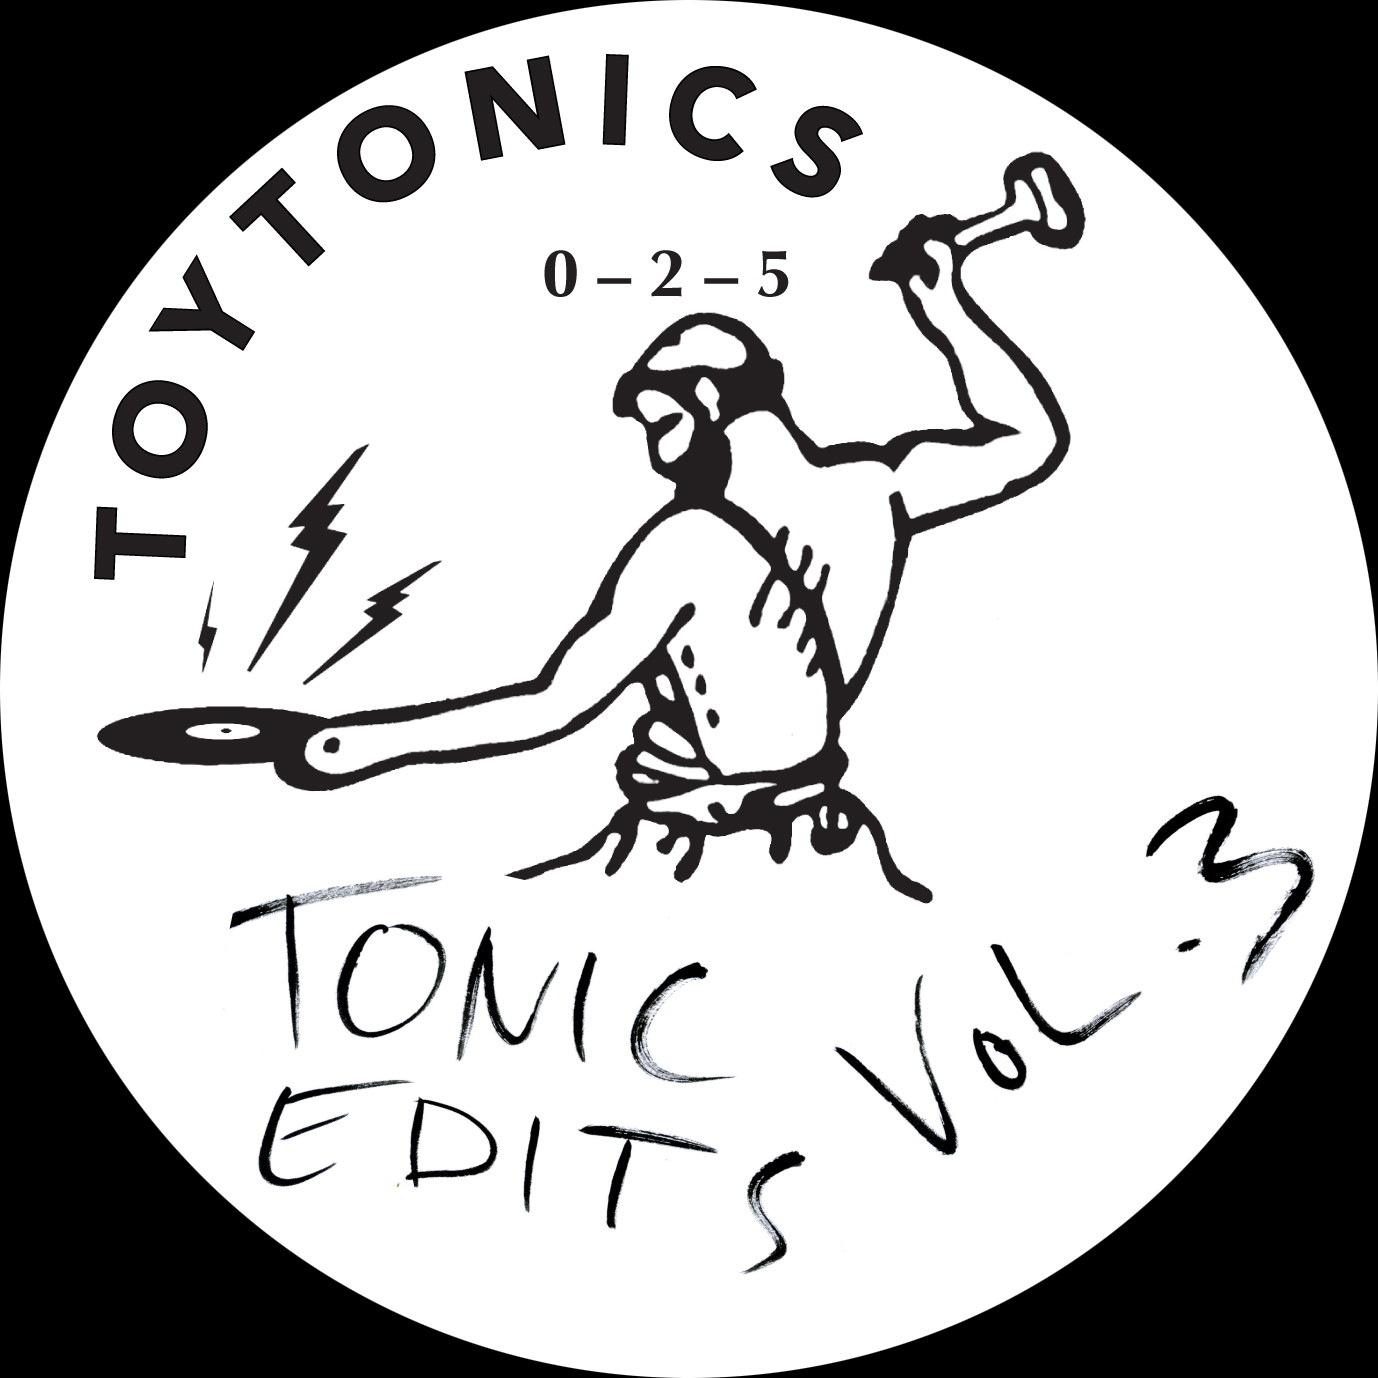 TOYT025: Tonic Edits Vol. 3